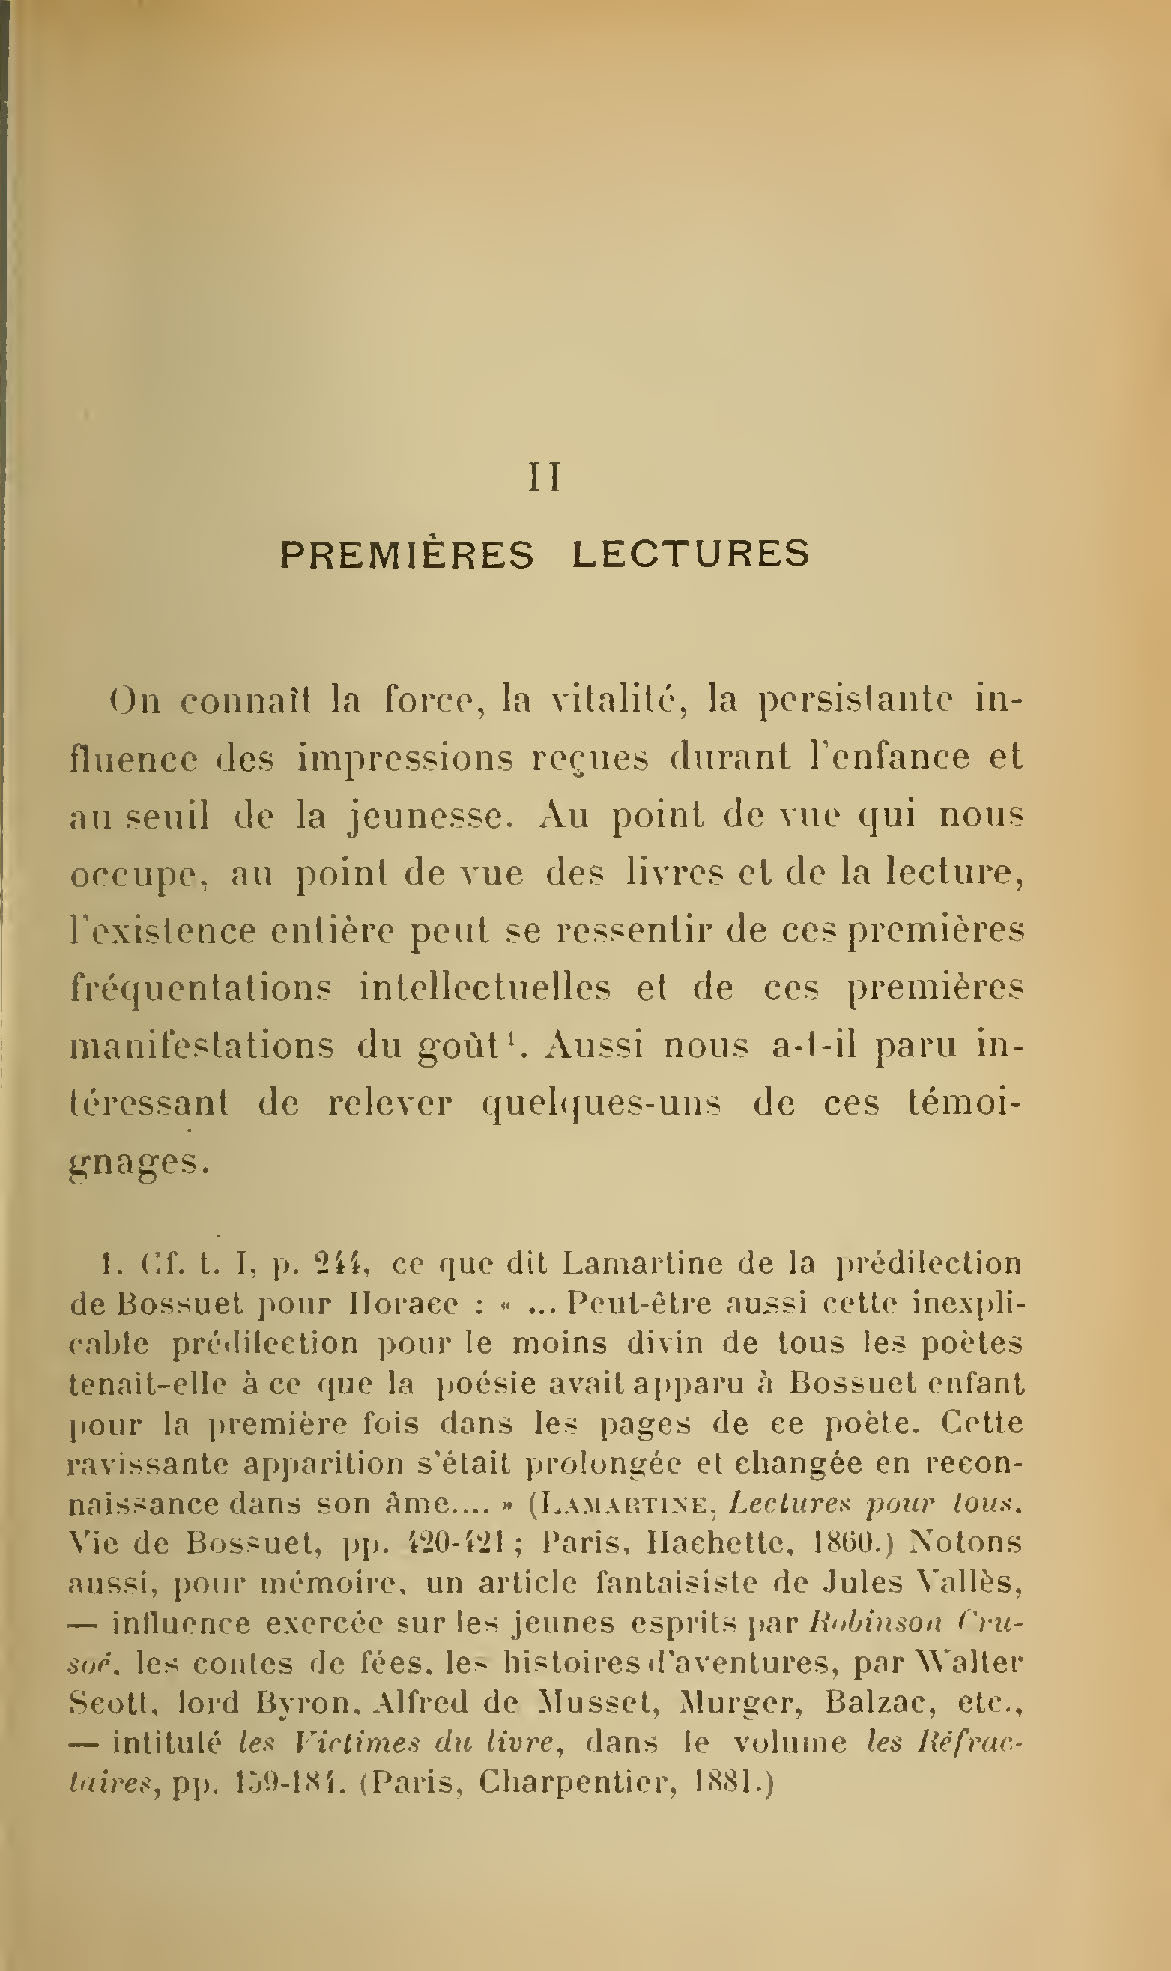 Albert Cim, Le Livre, t. II, p. 021.